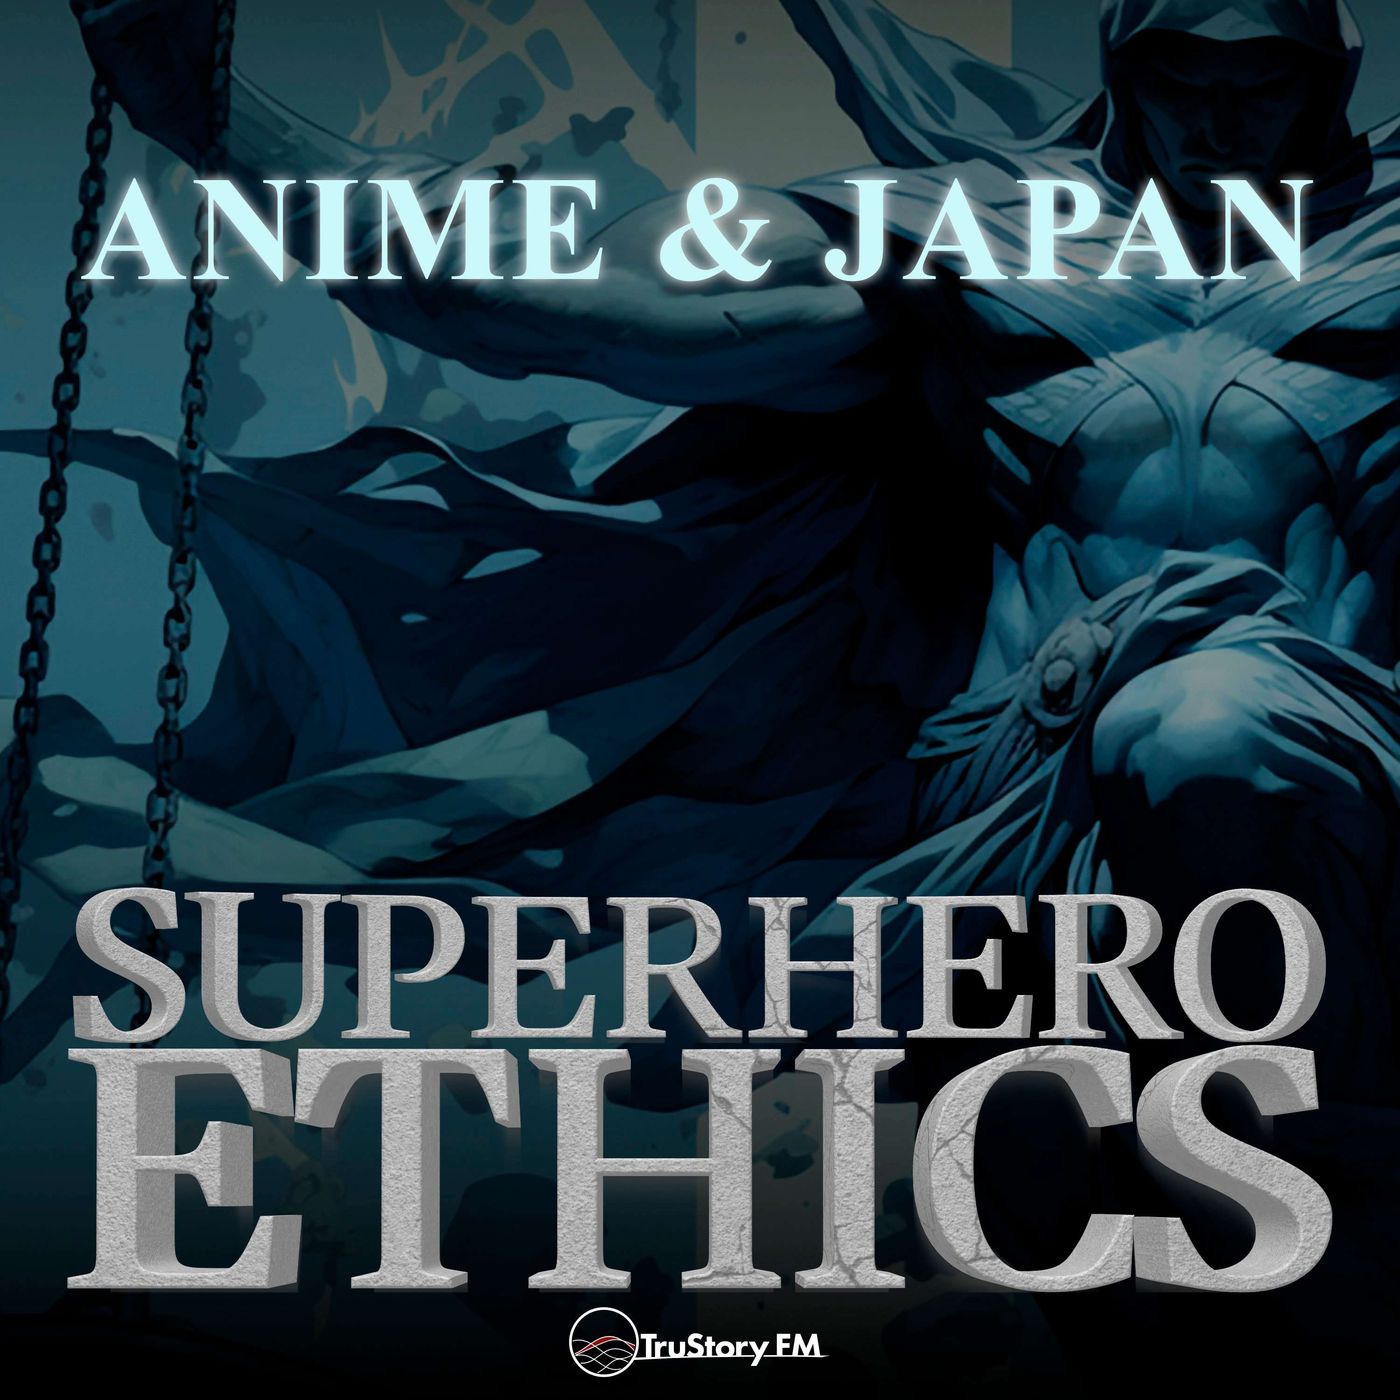 Anime & Japan